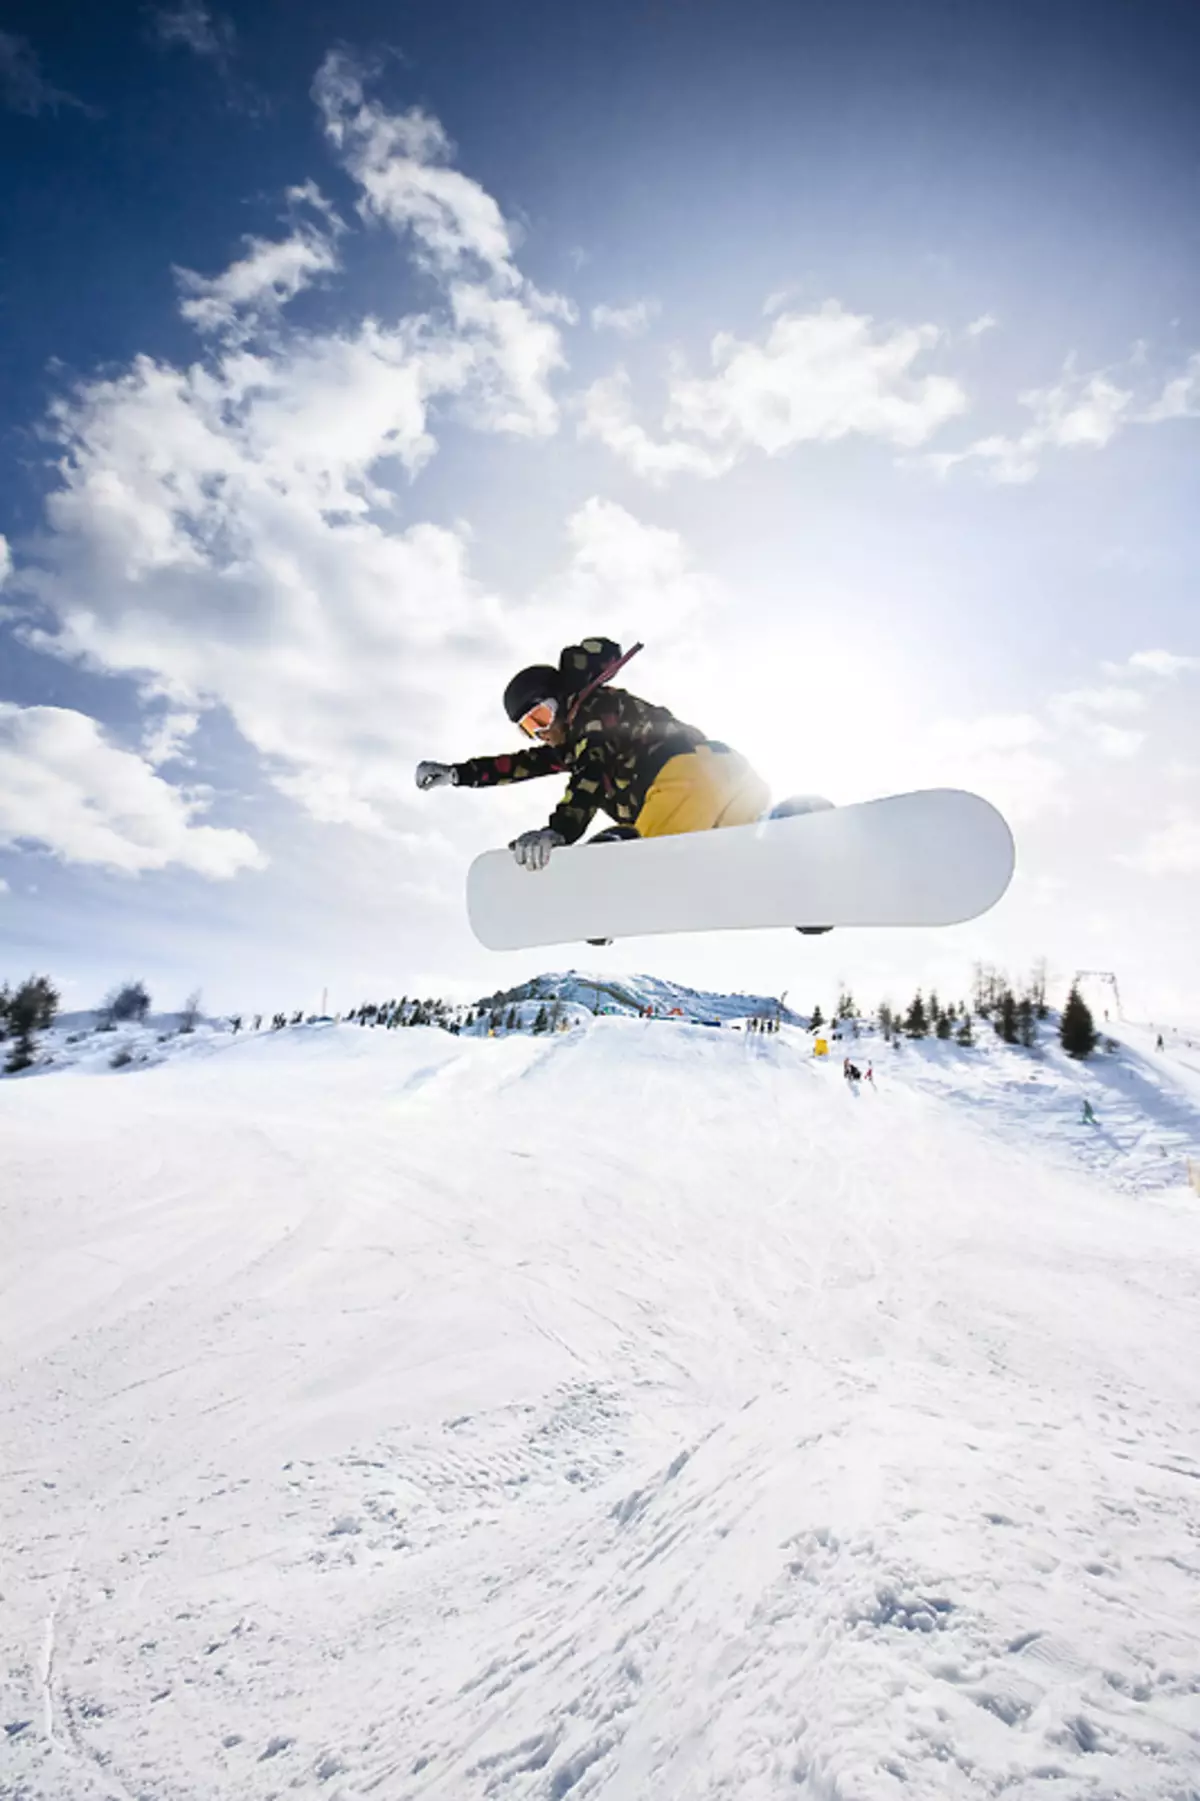 Botas de Snowboard (119 fotos): Como escolher botas de snowboard para mulheres, modelo Nike, Adidas e outras marcas populares 15127_116